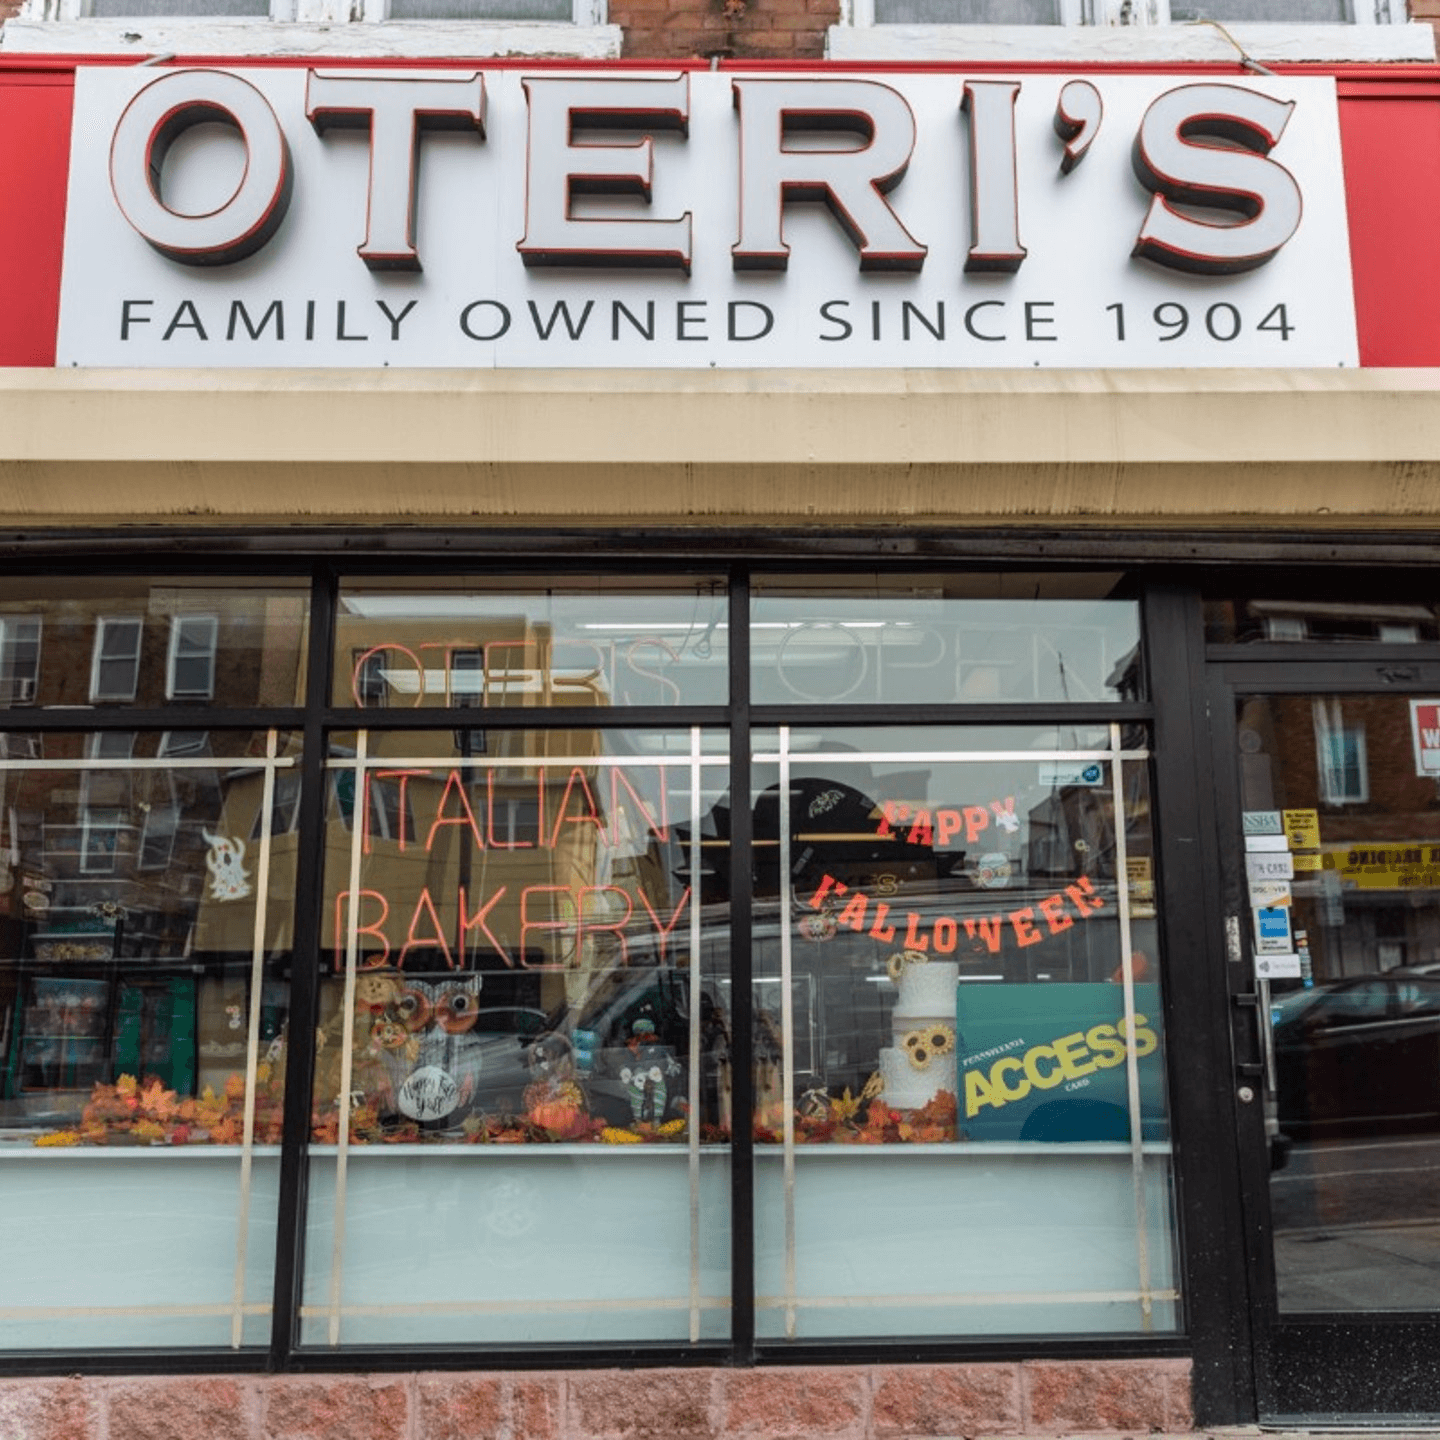 Welcome to Oteri’s Italian Bakery!